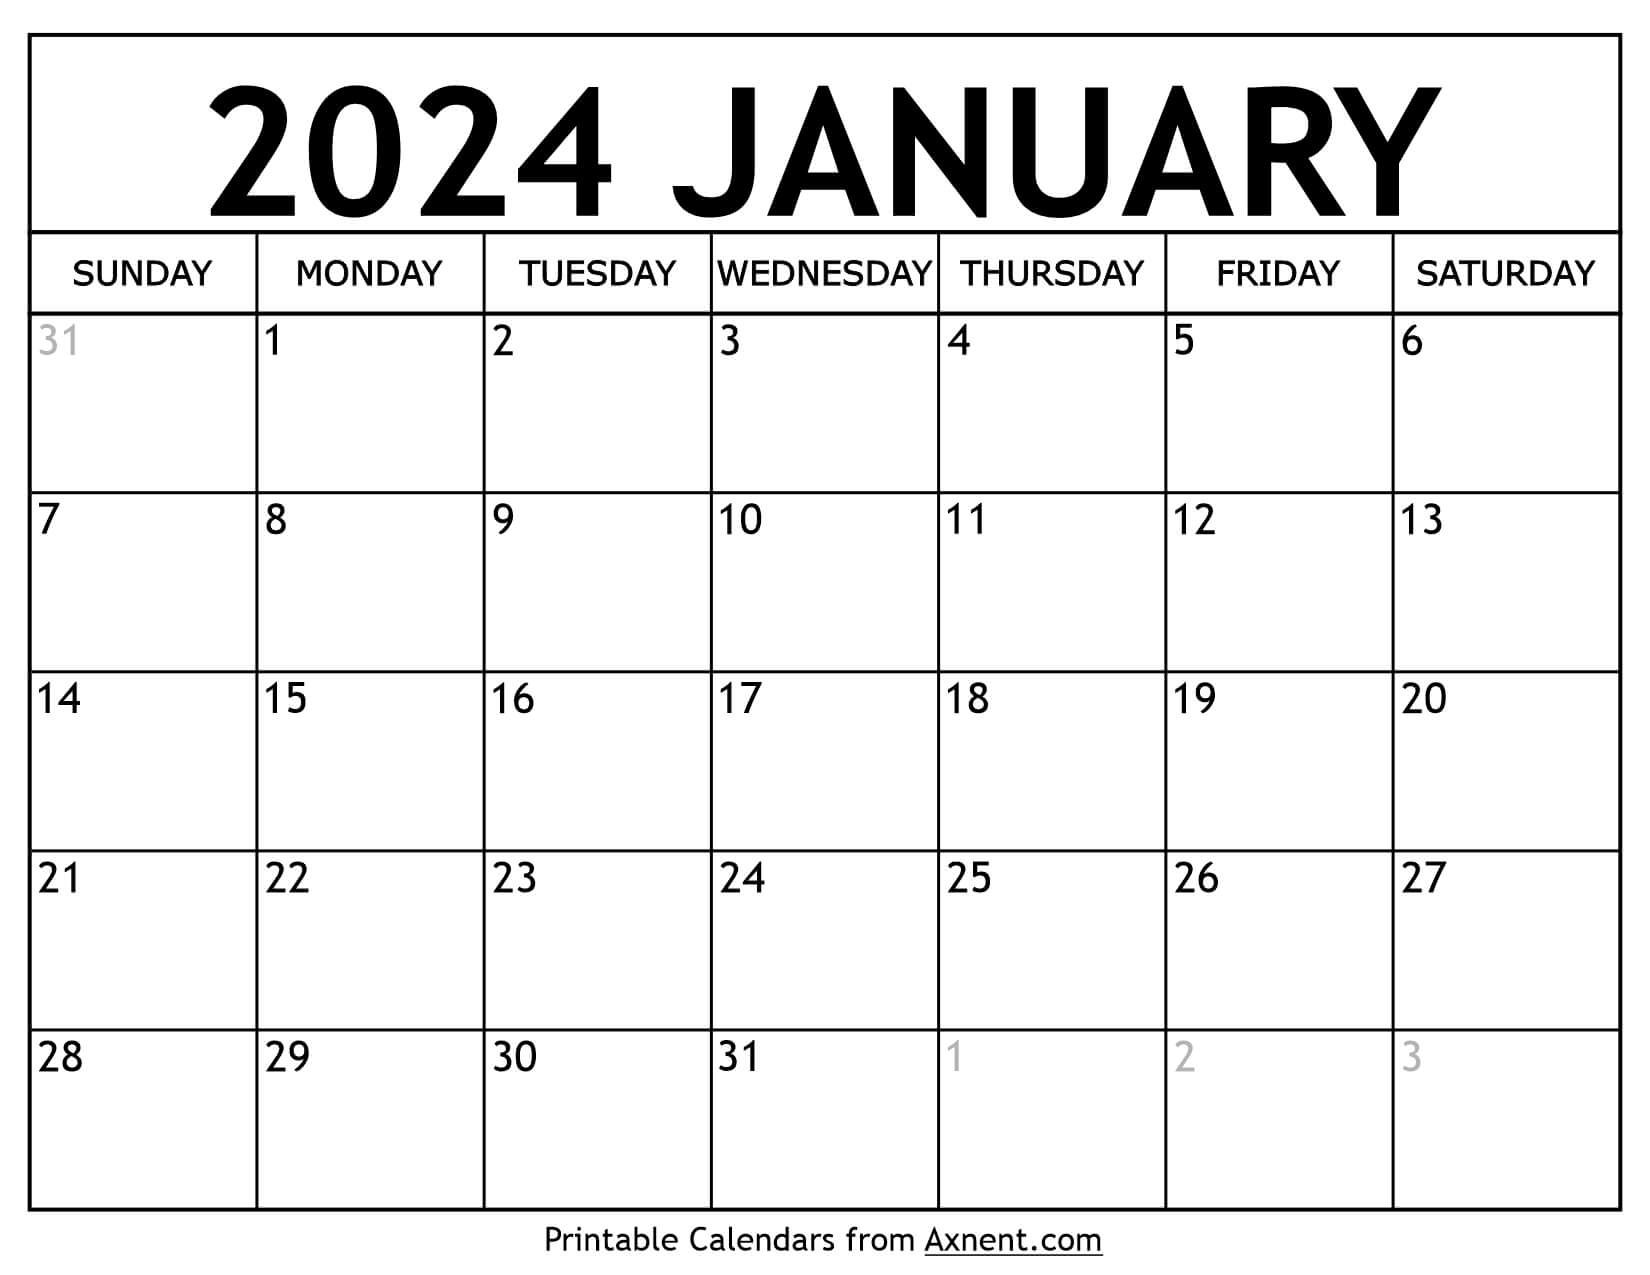 Printable January 2024 Calendar Template - Print Now for January Monthly Calendar 2024 Printable